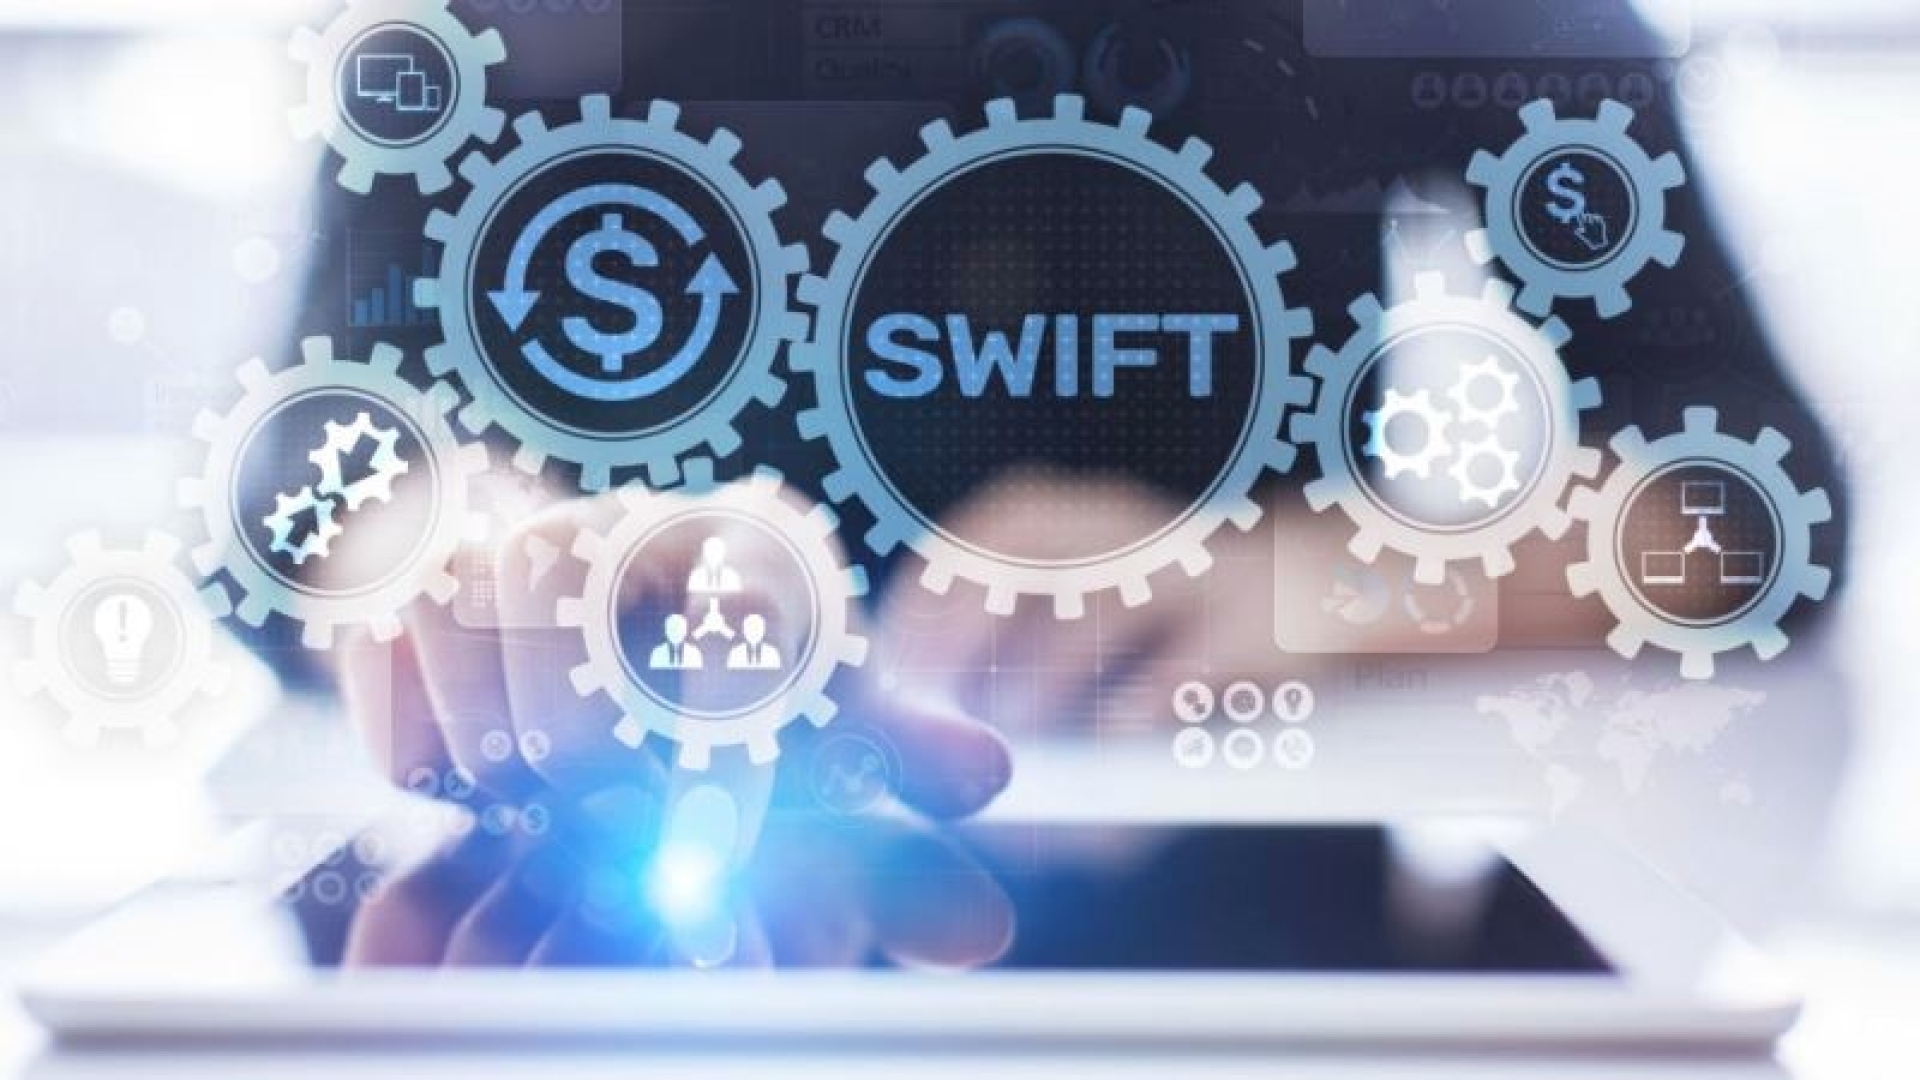 Slick SWIFT and no fraud